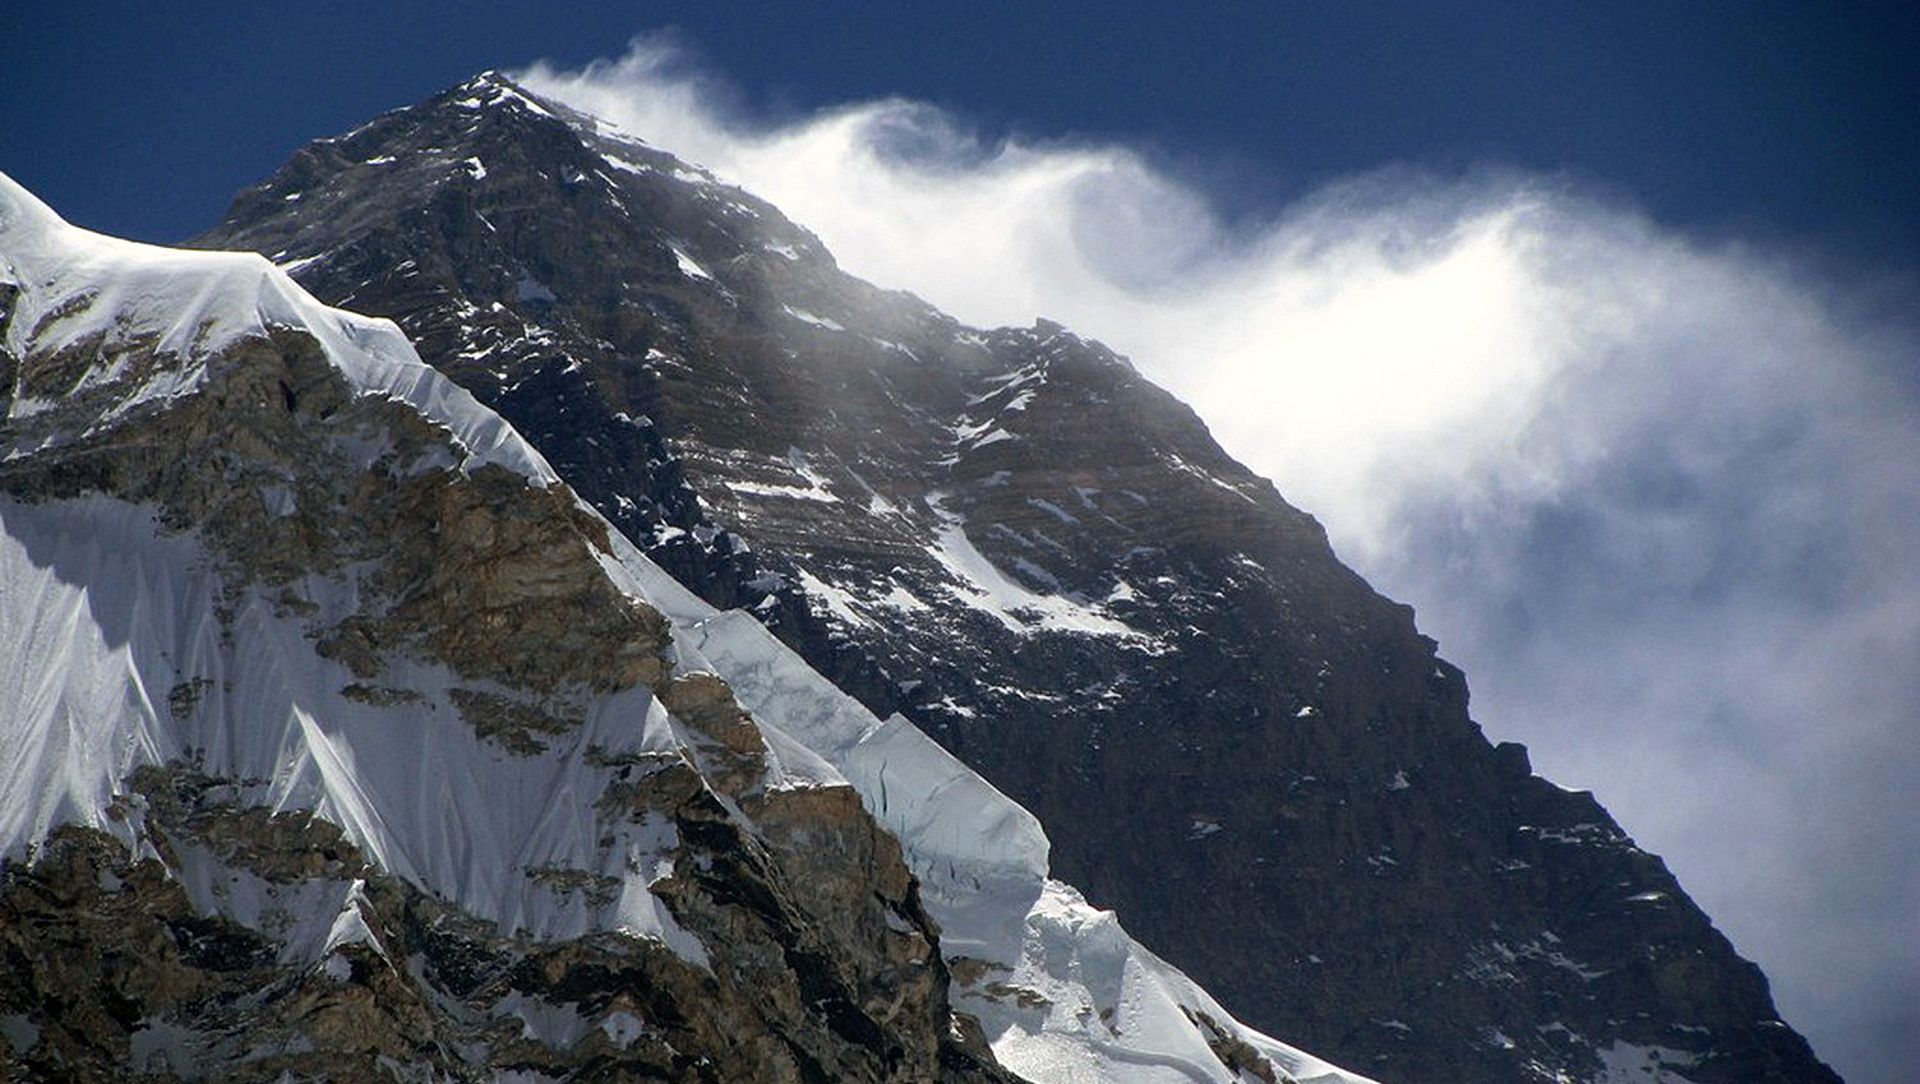 Katmandu, 01.04.2013 - Osamdesetogodinji japanski planinar, koji je bio podvrgnut èetirima operacijama na srcu, kreæe u pohod na Mount Everest i nastojat æe treæi put osvojiti najvii vrh na svijetu te postati najstarija osoba koja je to uspjela. Arhivska fotografija od 19.05.2009. godine prikazuje Mount Everest.
foto FaH/ ds